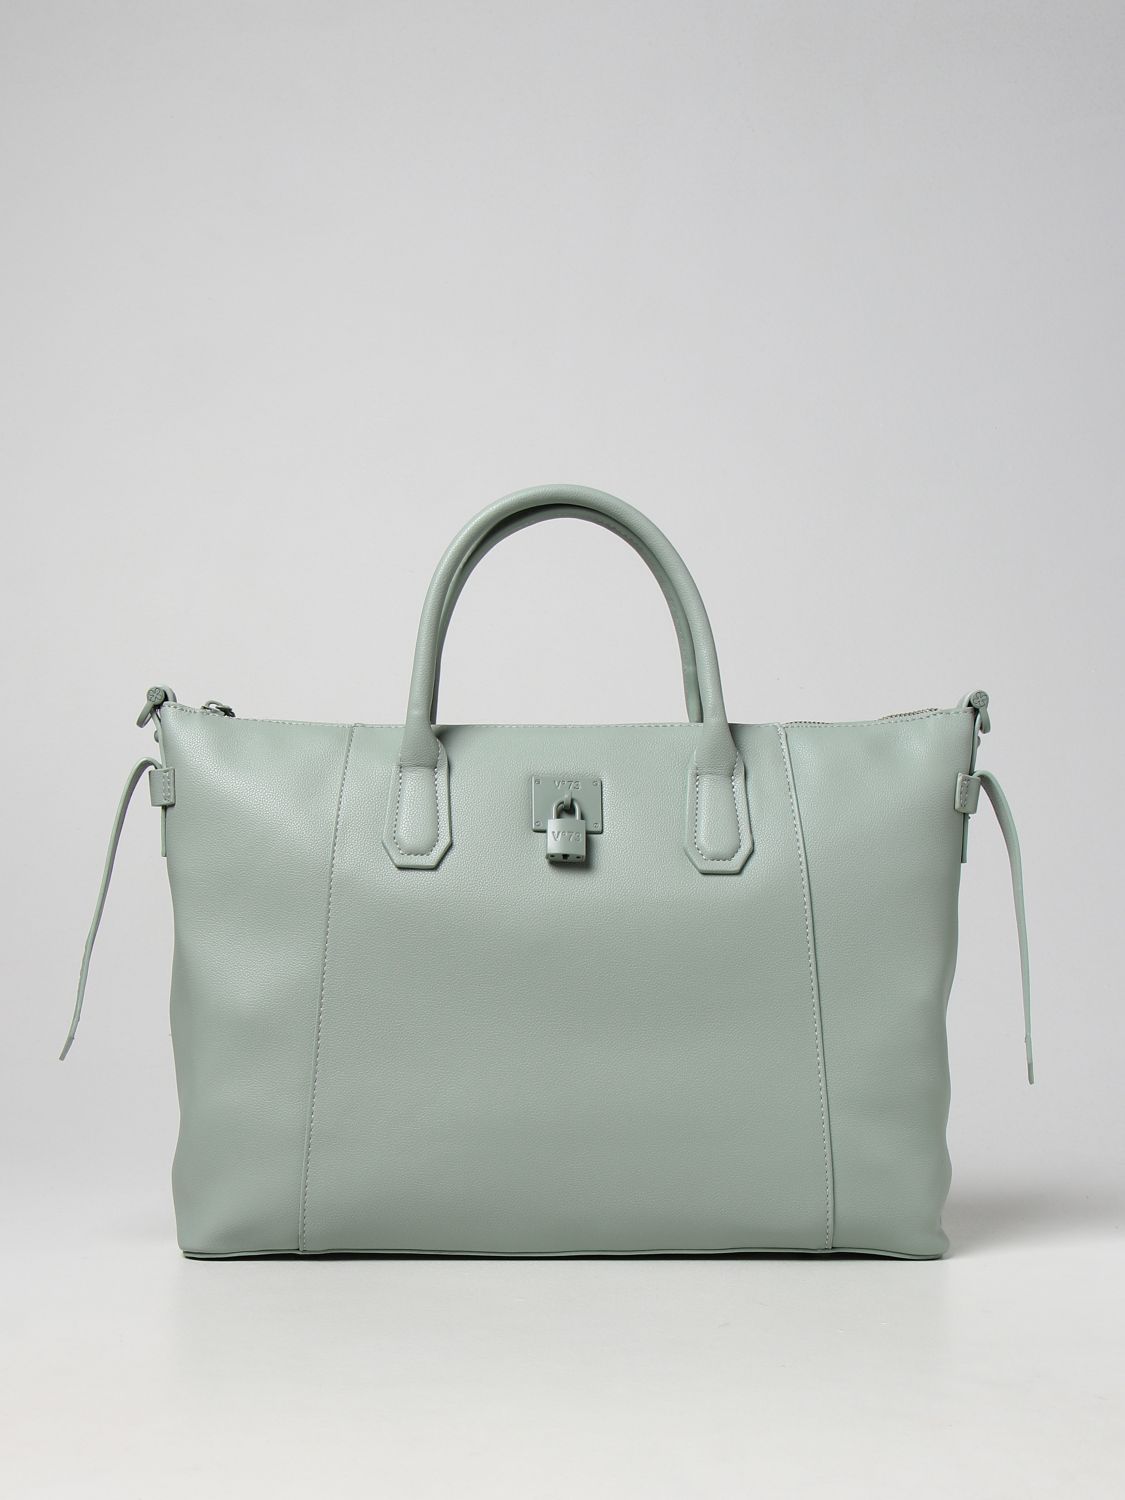 V73: Mariel Bis V ° 73 bag in synthetic leather - Green | V73 tote bags ...